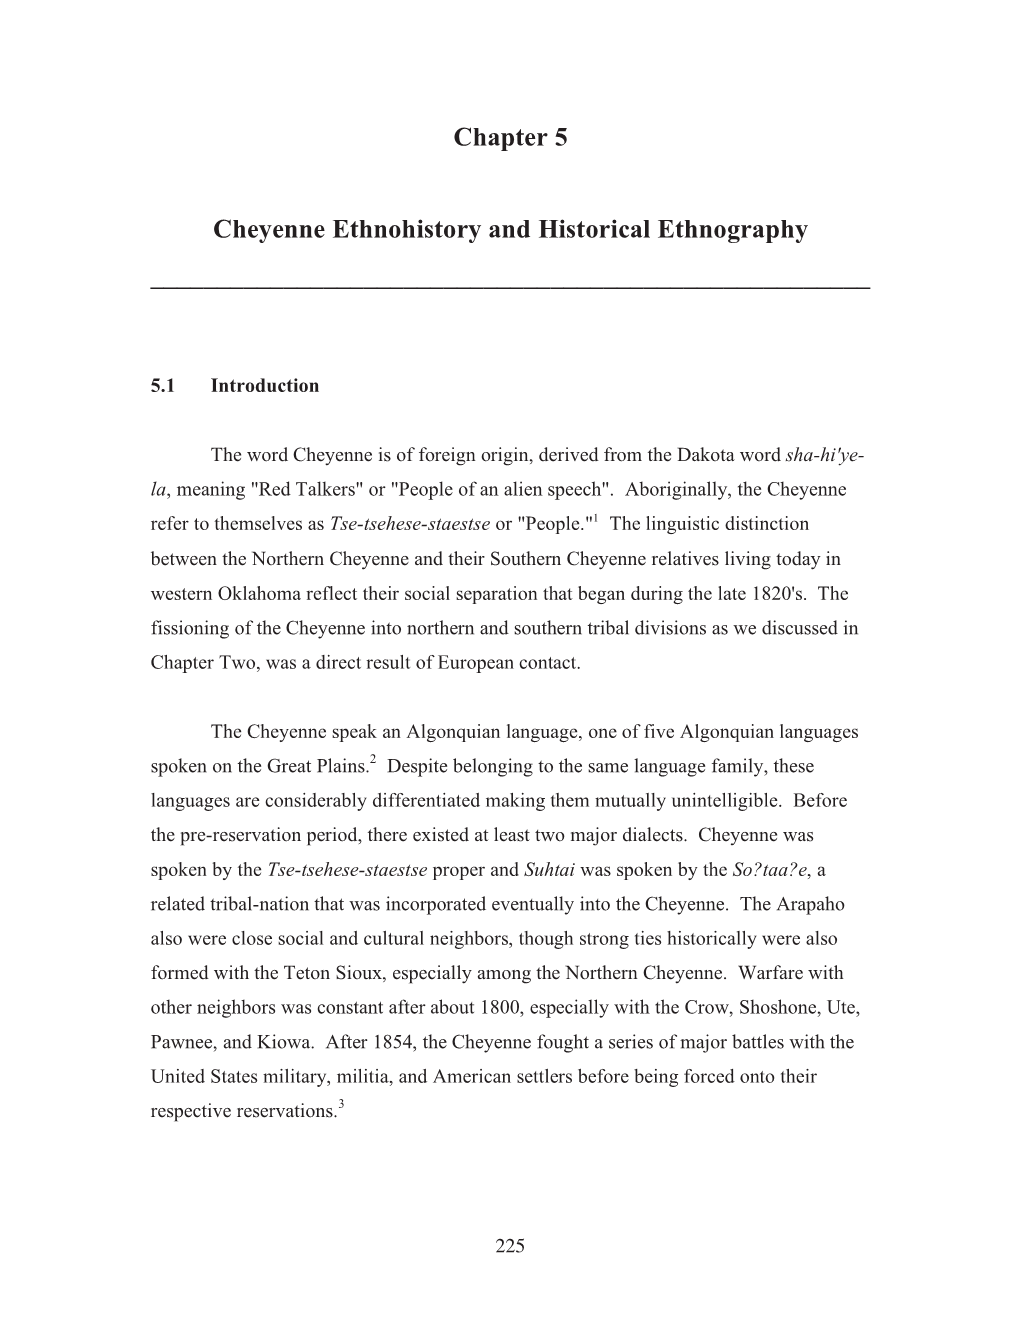 Chapter 5 Cheyenne Ethnohistory and Historical